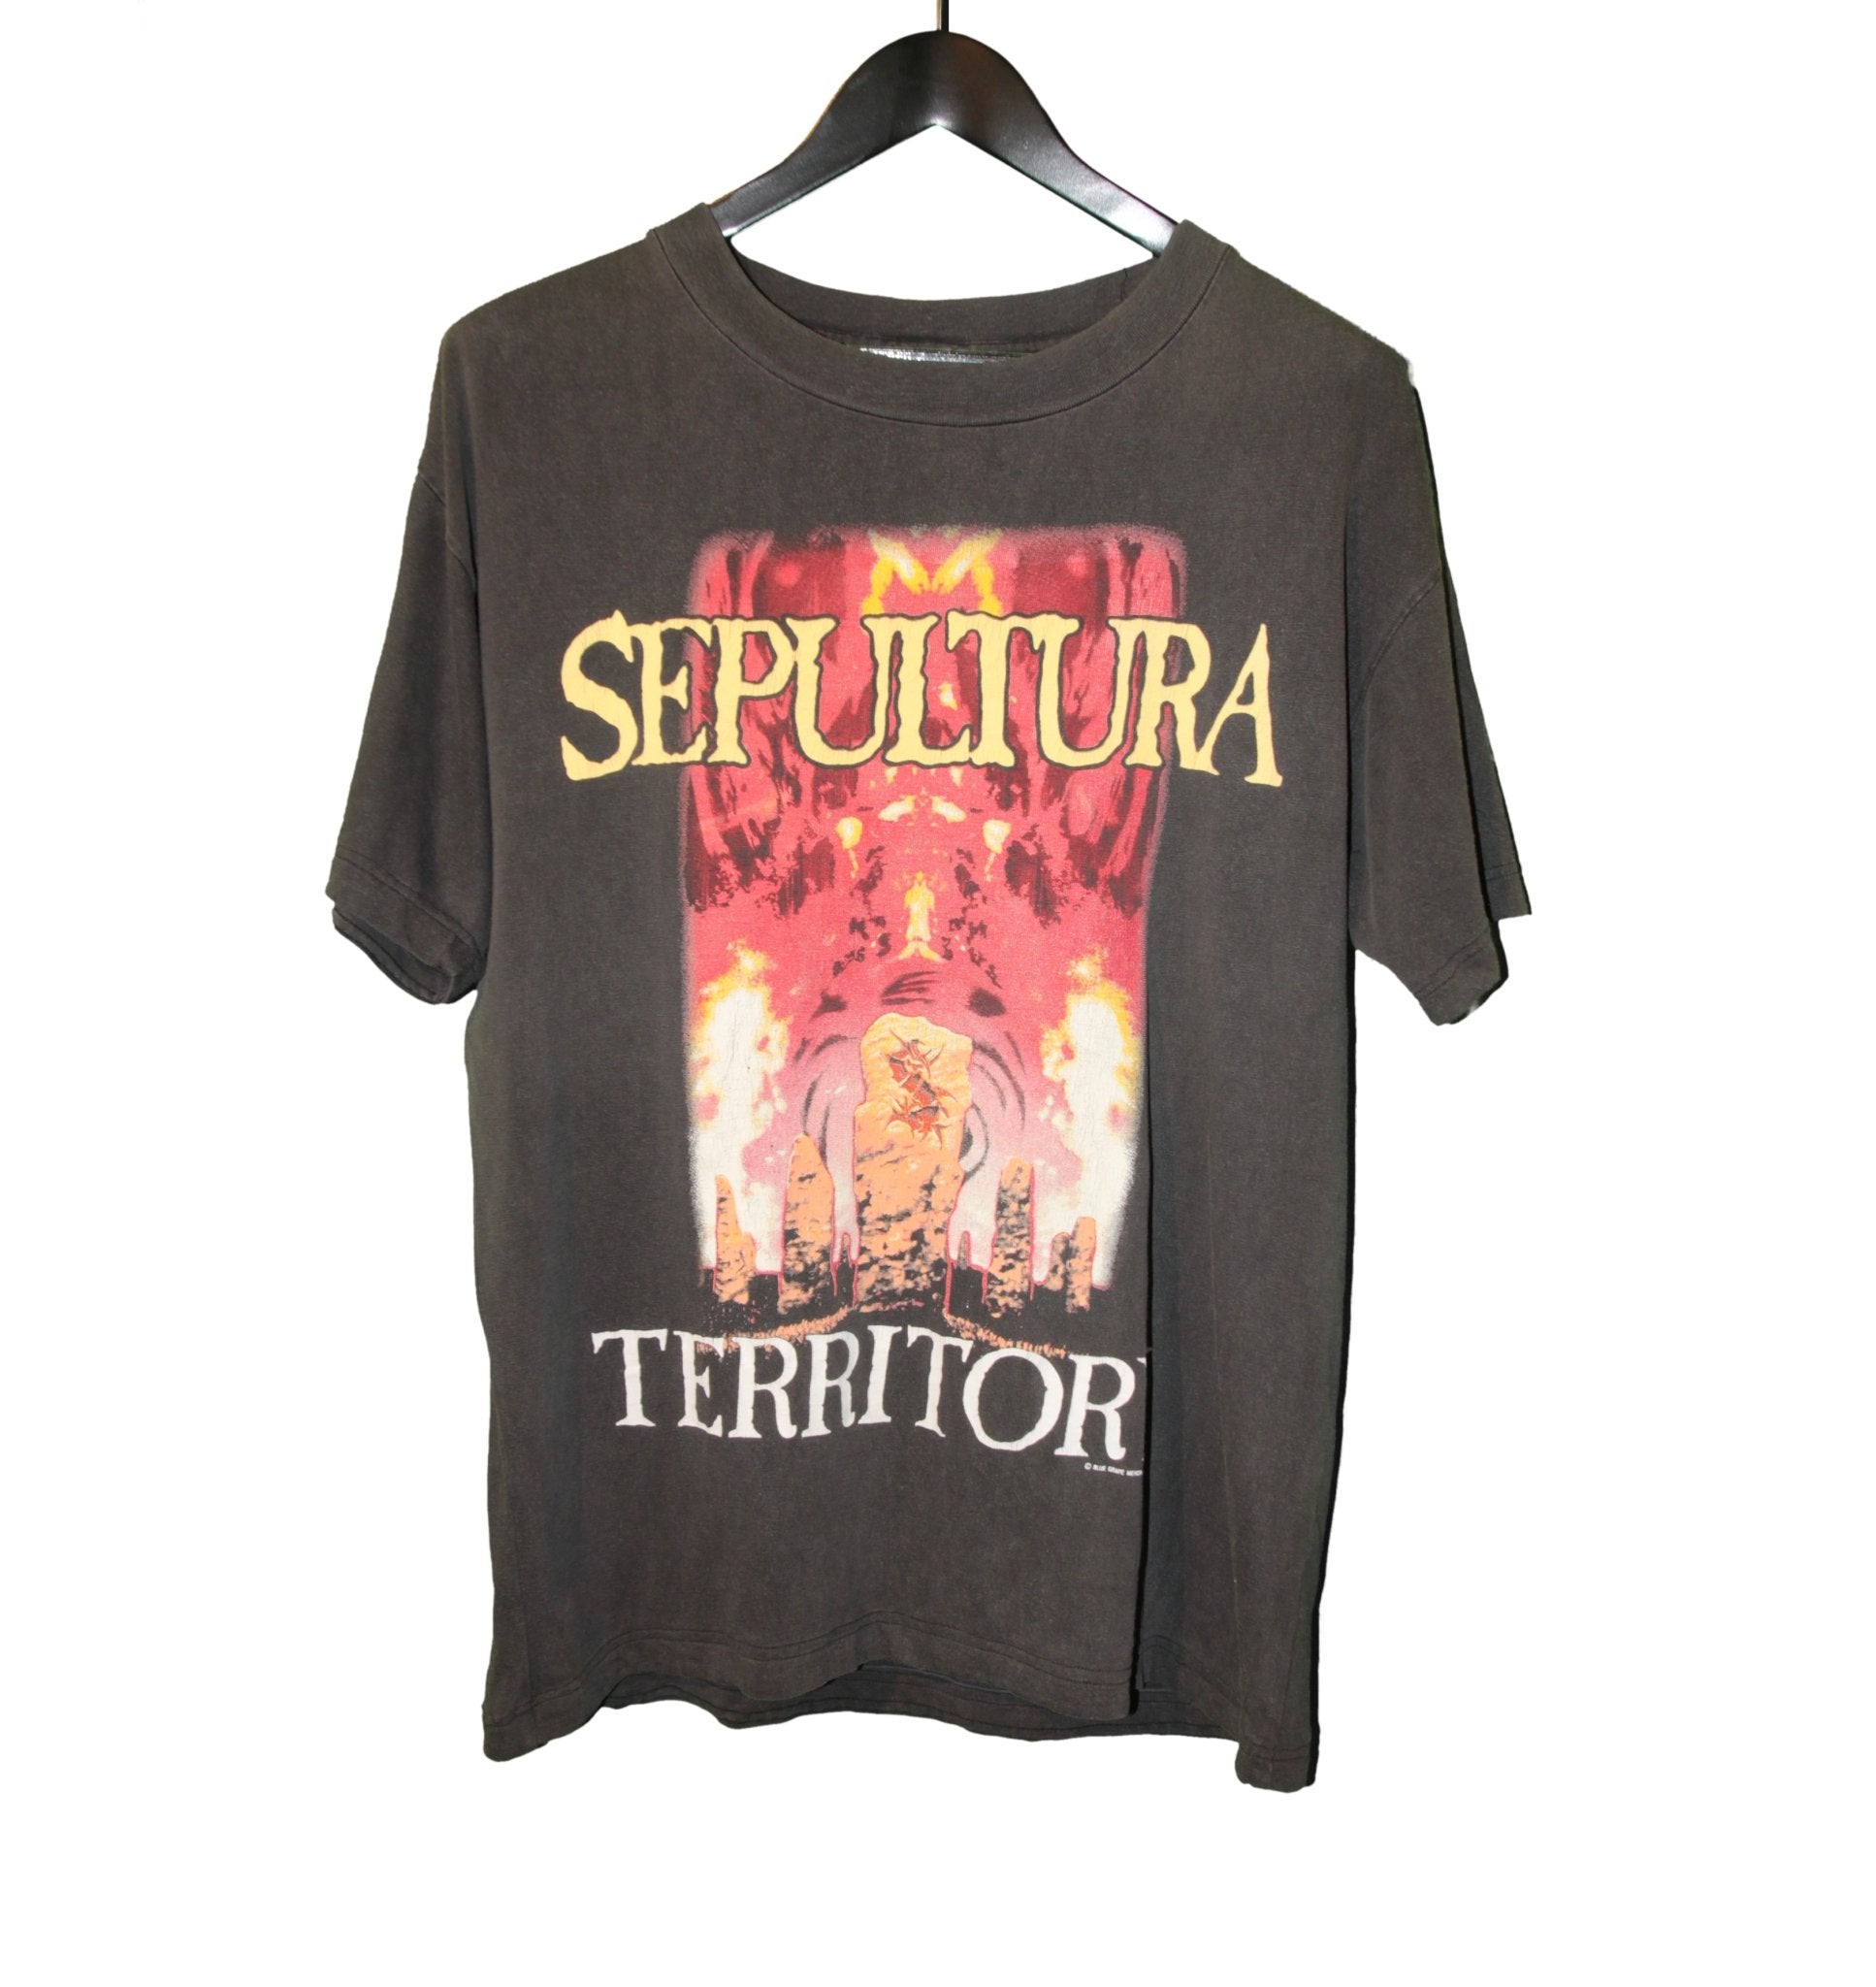 Sepultura 1993 Territory Shirt - Faded AU